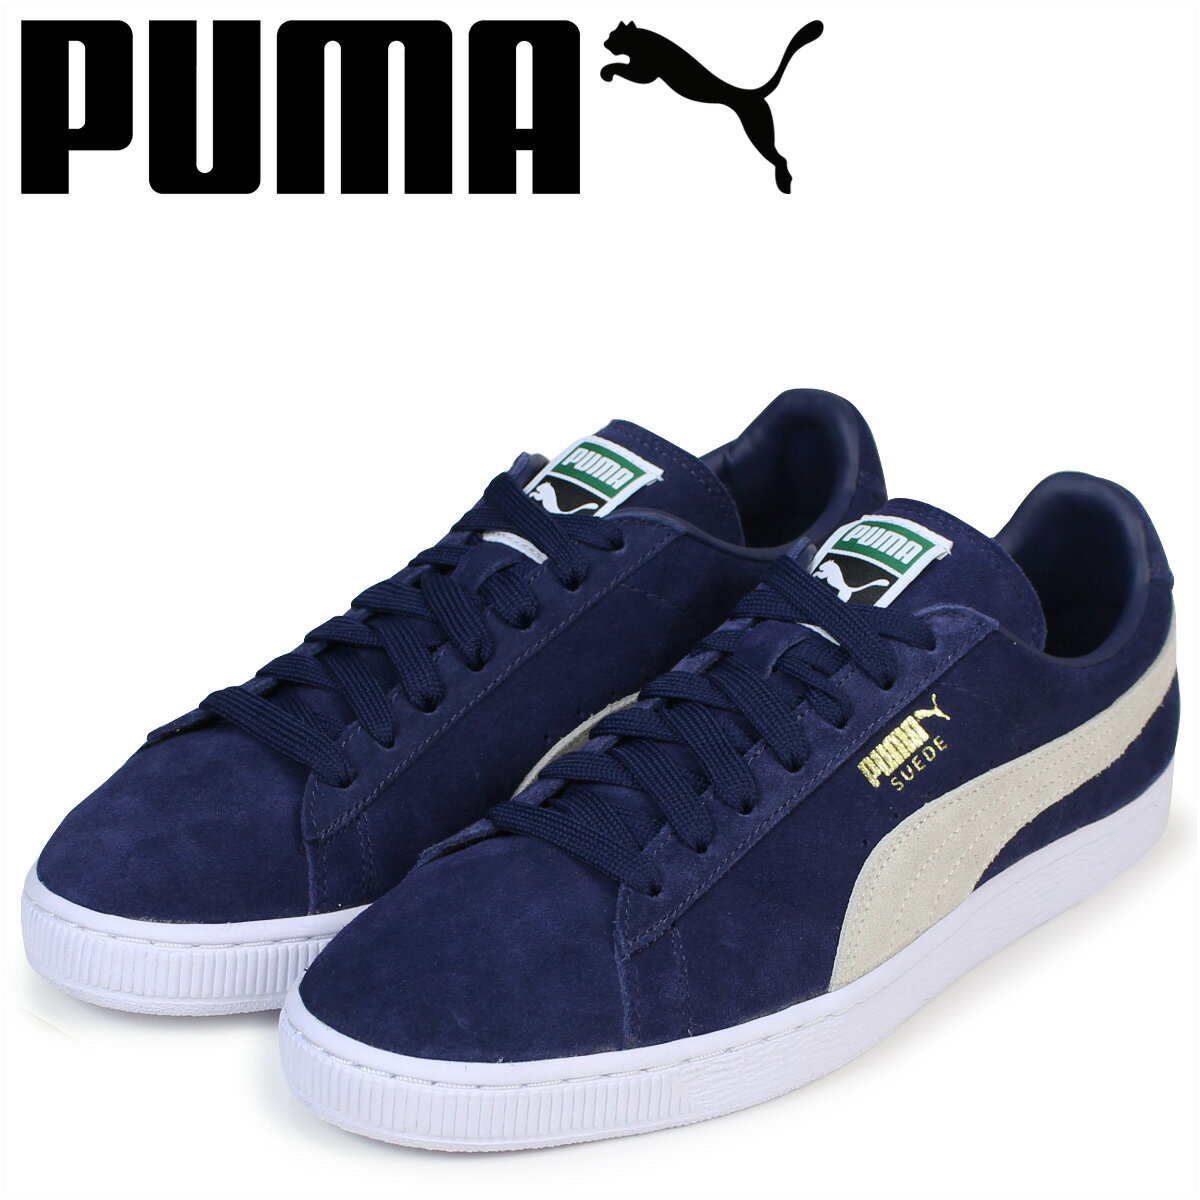 puma navy sneaker shoes